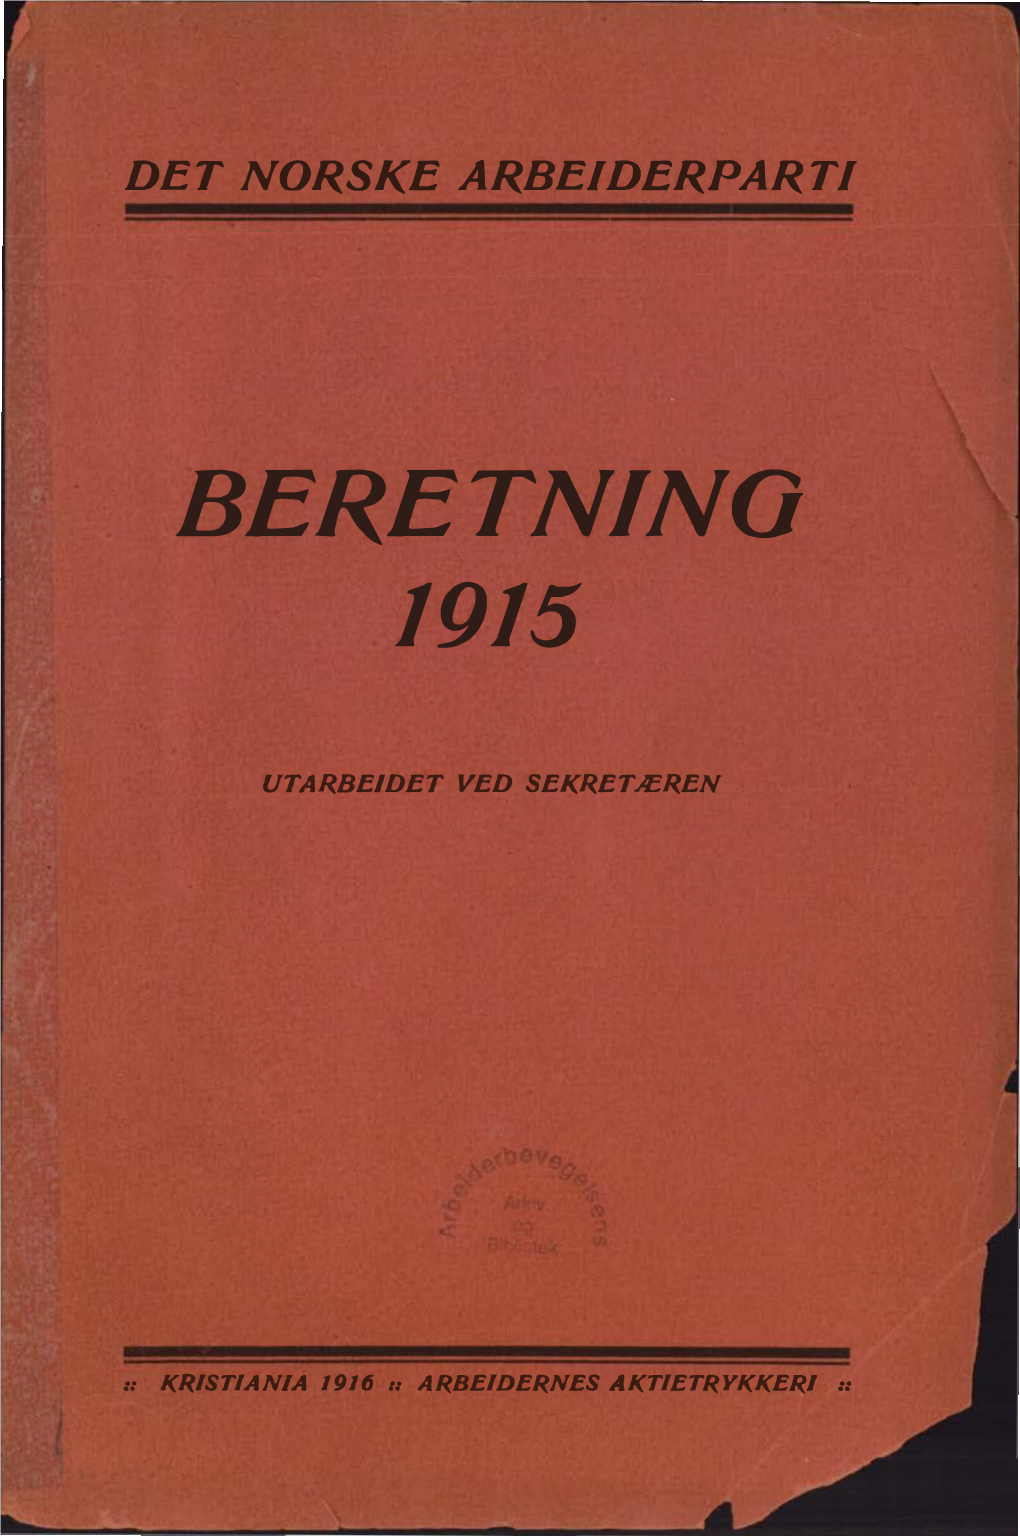 Beretning 1915